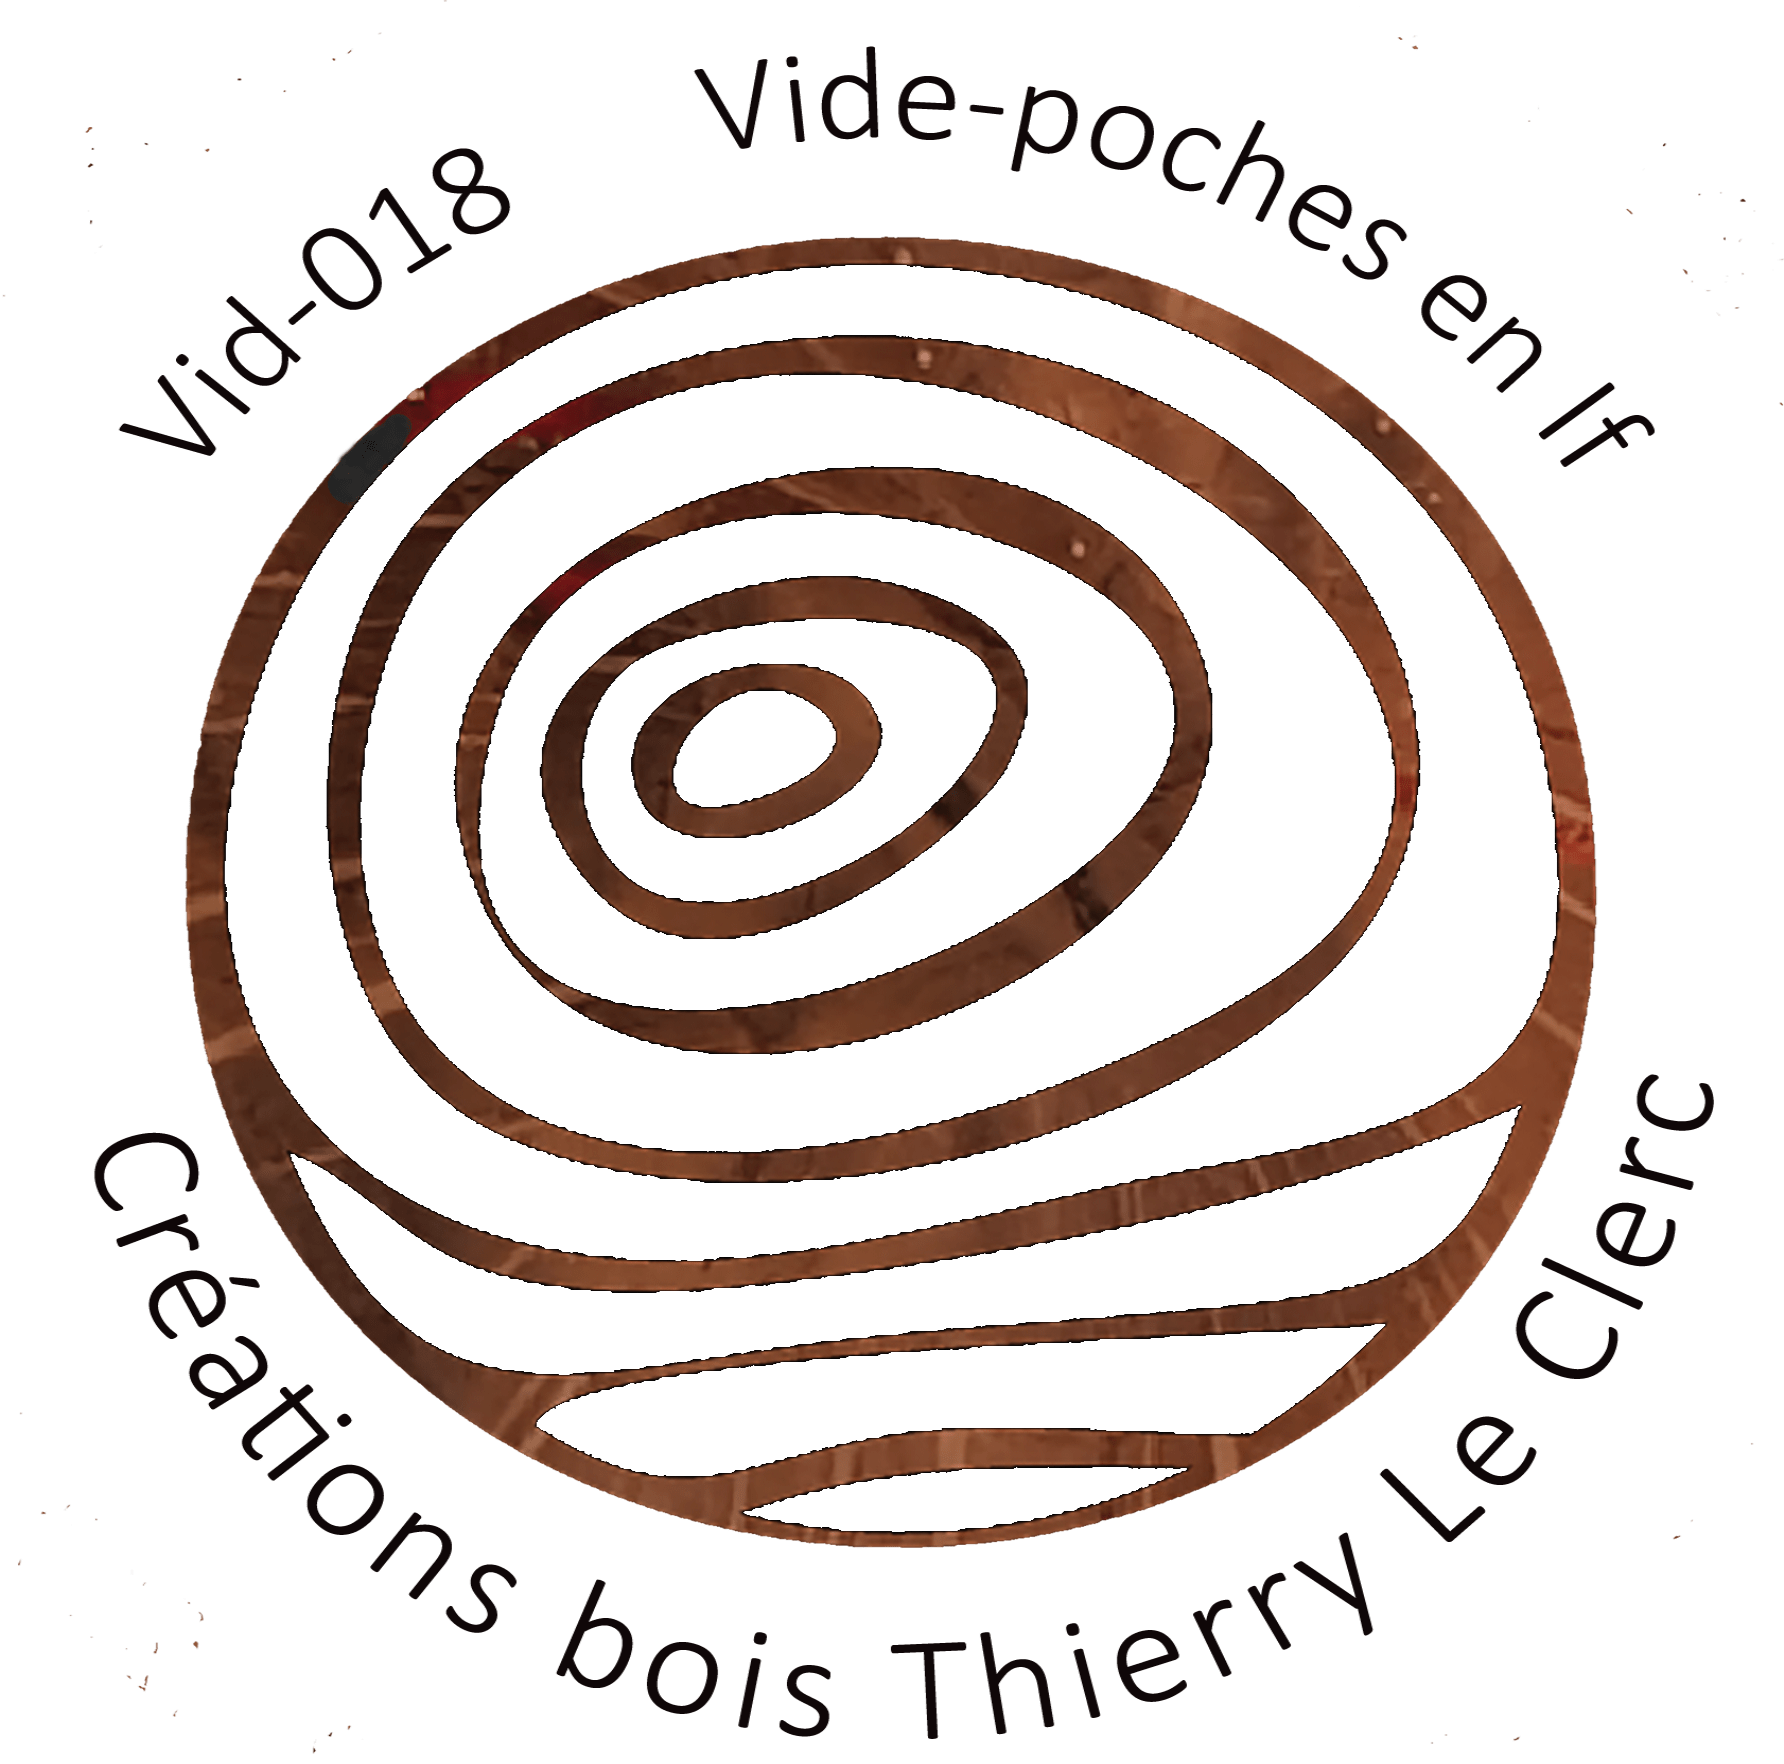 Vide-poches en If réf Vid-018 logo